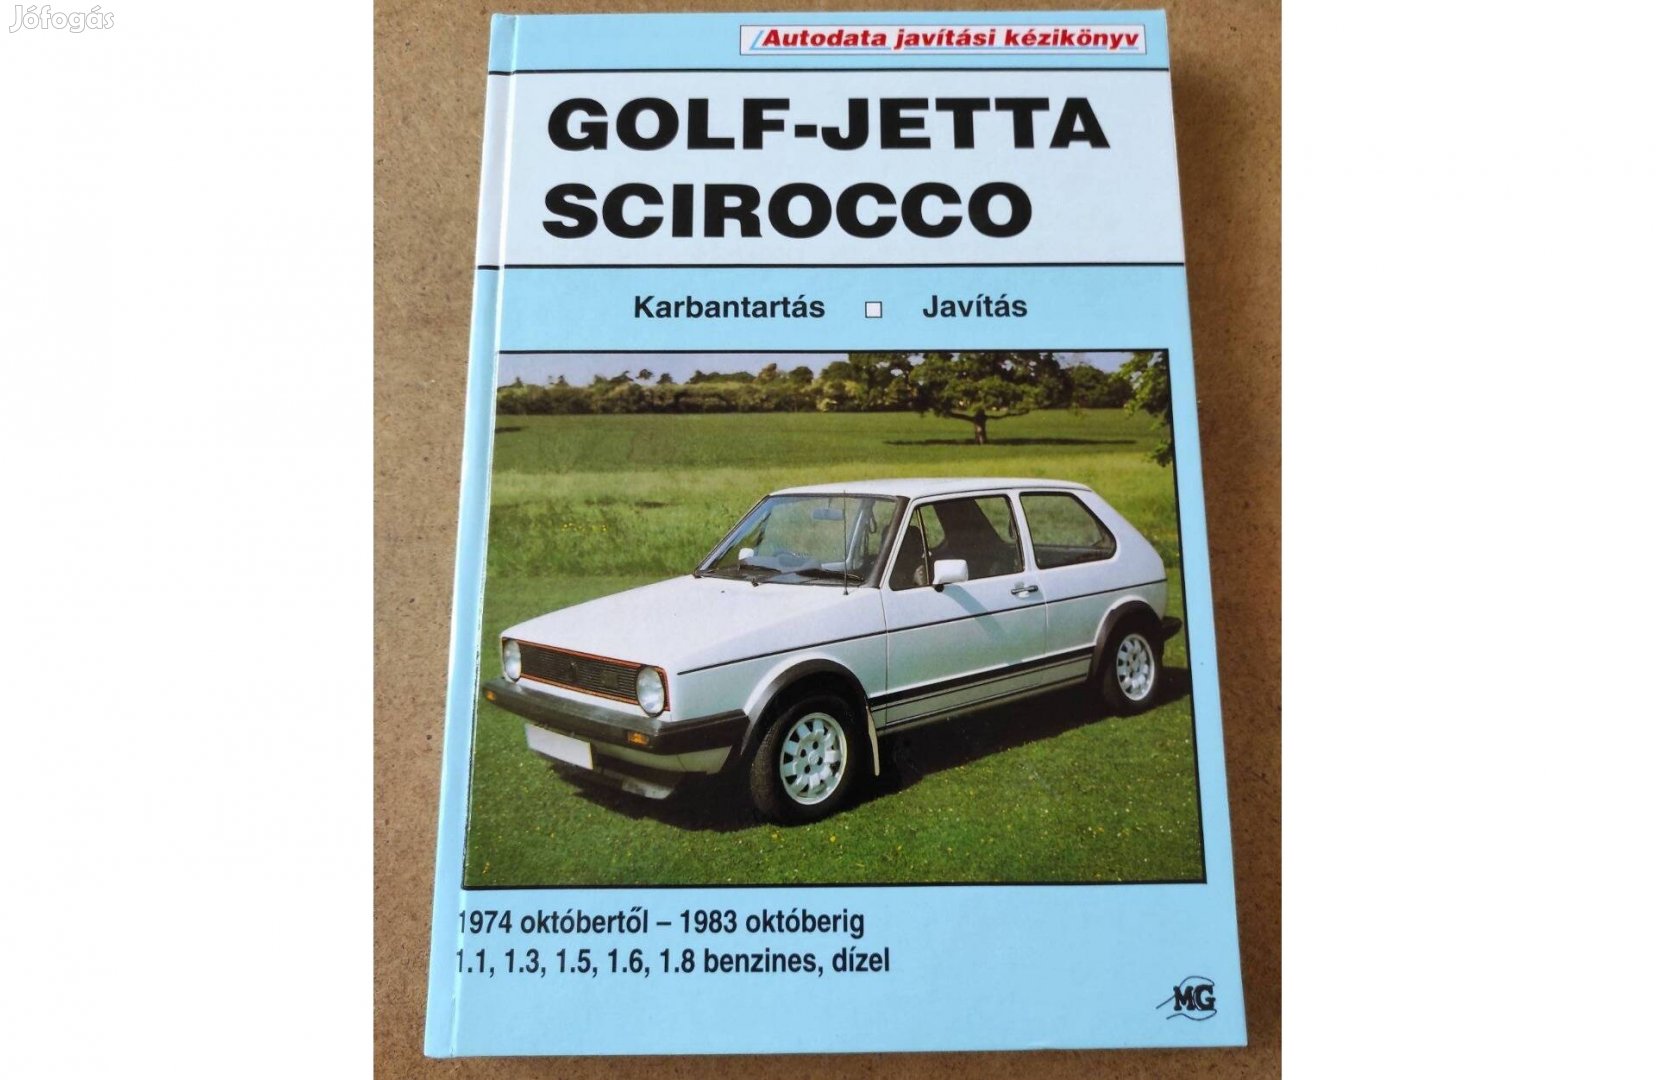 Volkswagen Vw. Golf Jetta Scirocco javítási karbantartási könyv